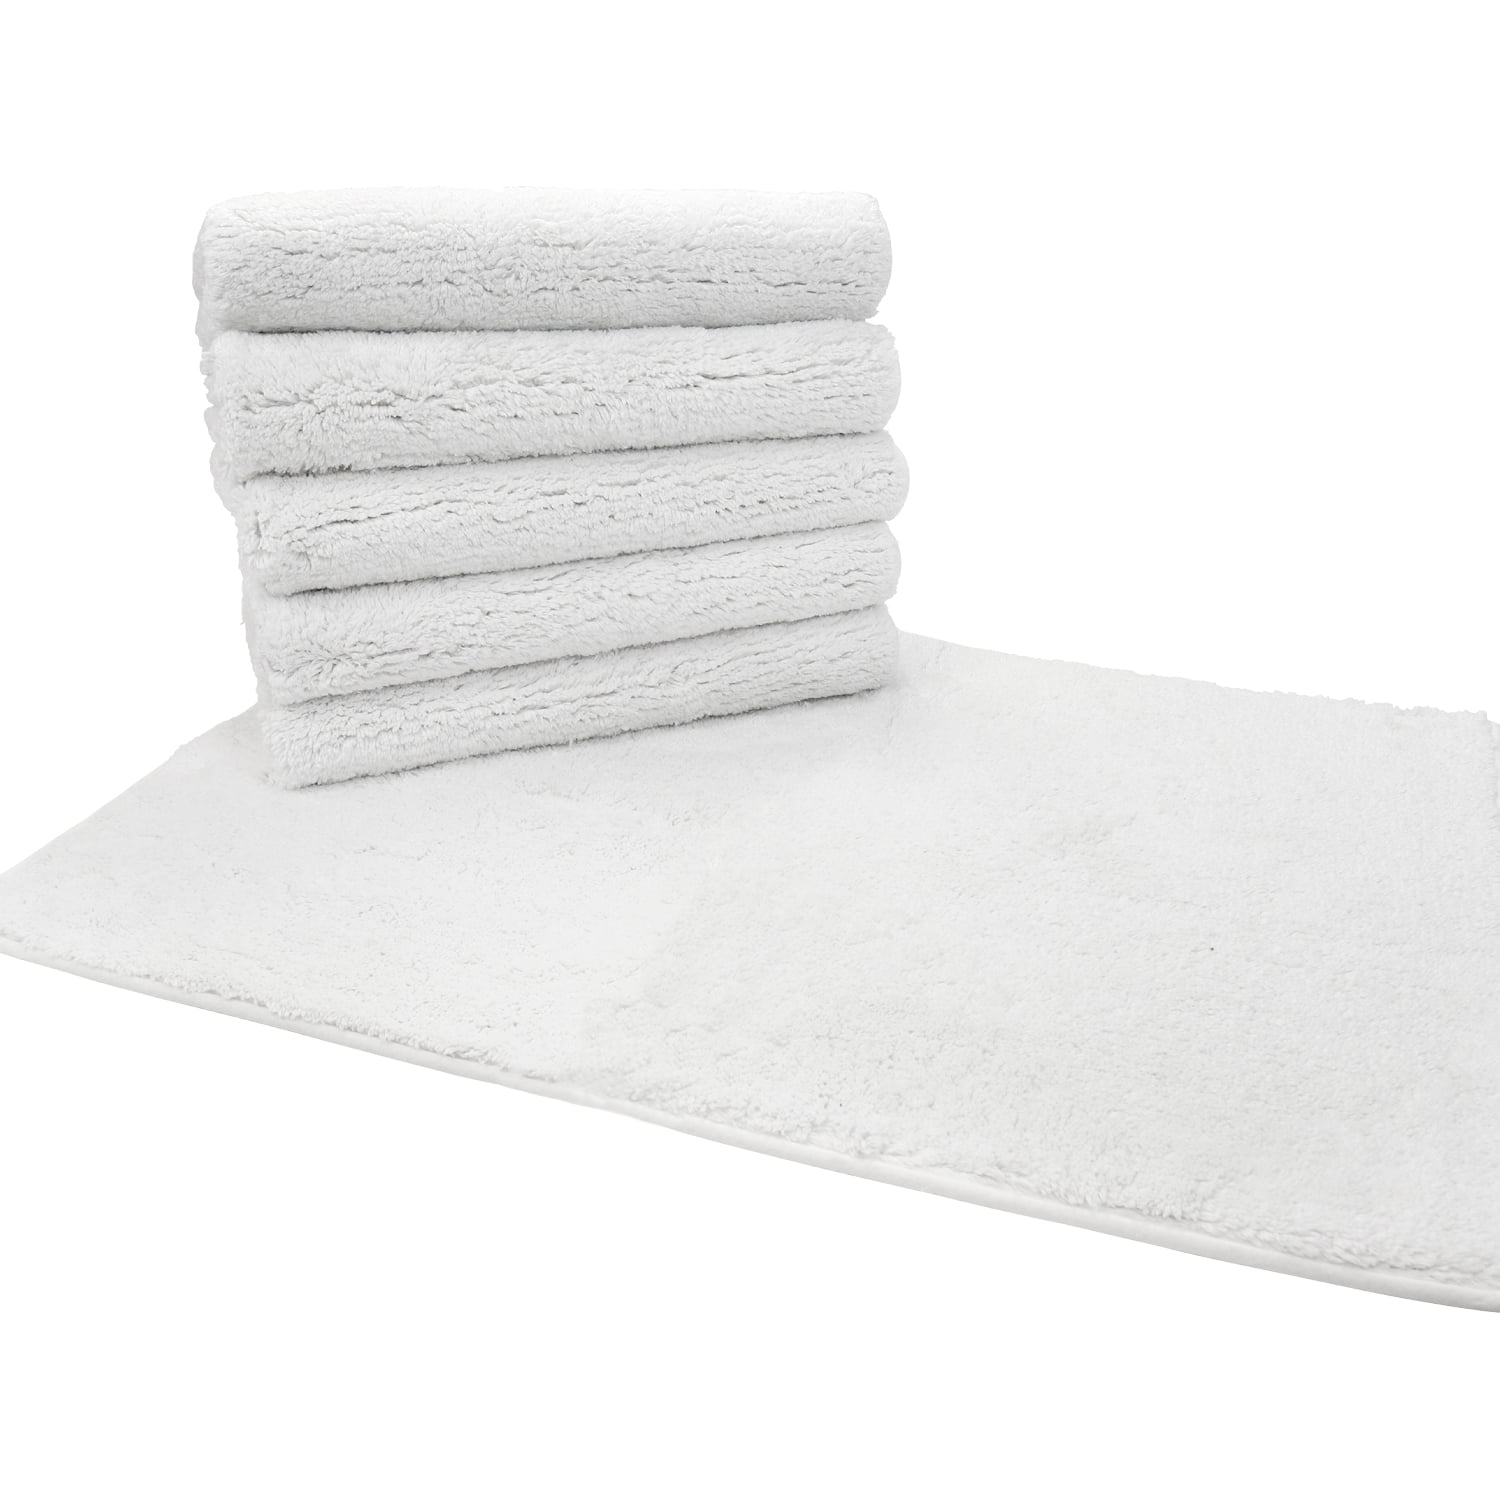 1 new white 100% cotton hotel terry cloth bath mat 7#dz 20x30 